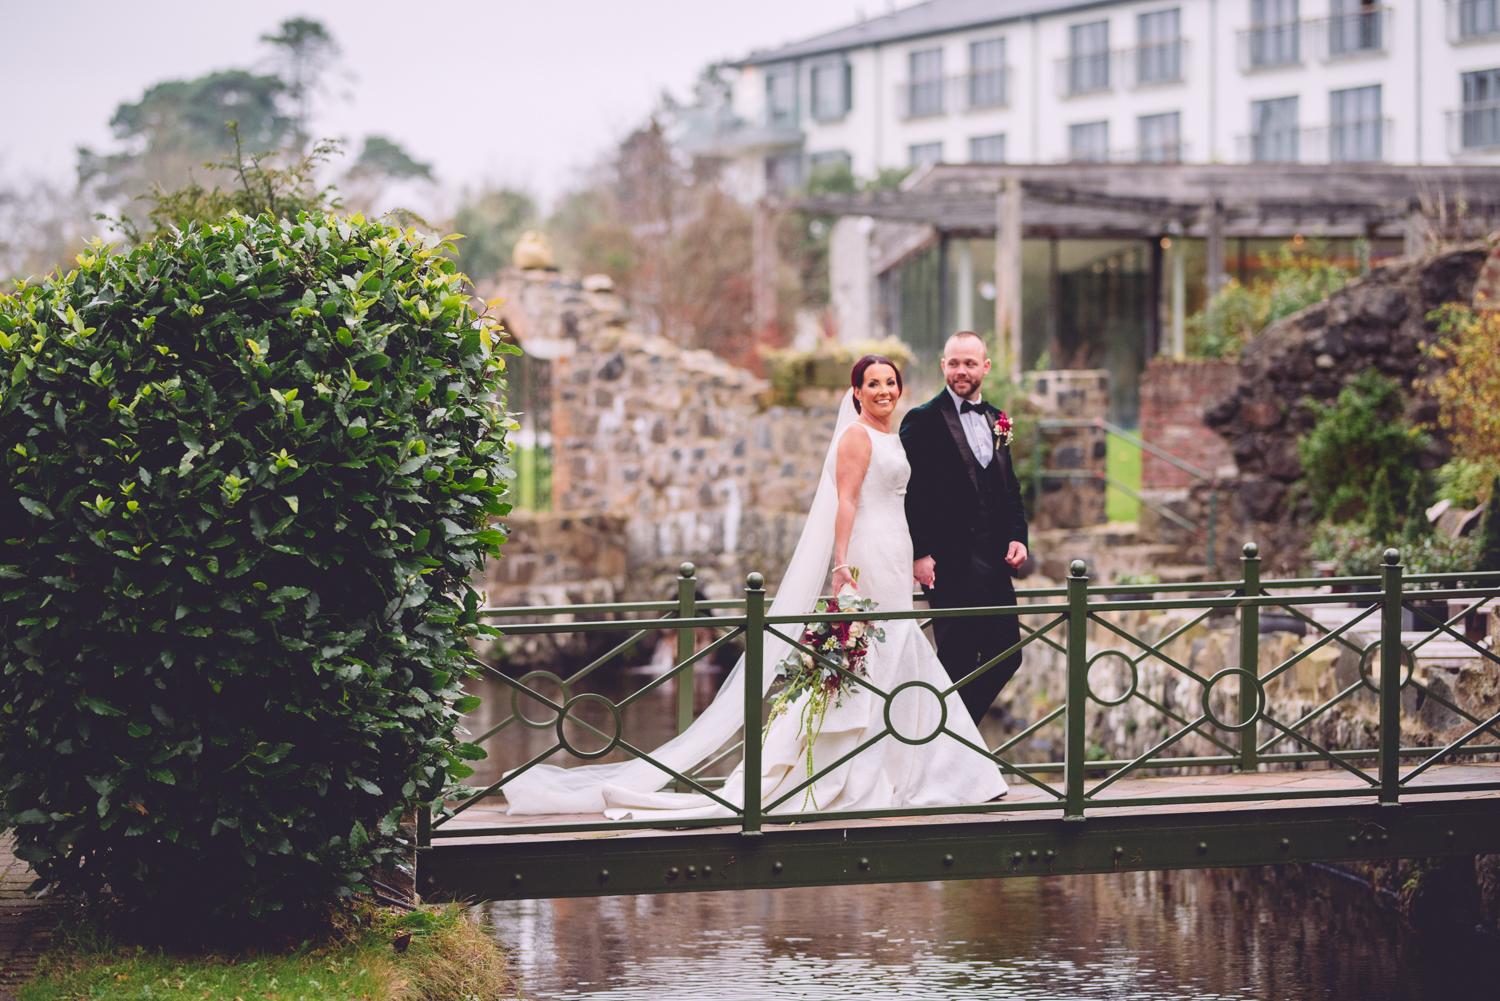 Kerryanne & Michael's Wedding - Galgorm Resort & Spa, Ballymena